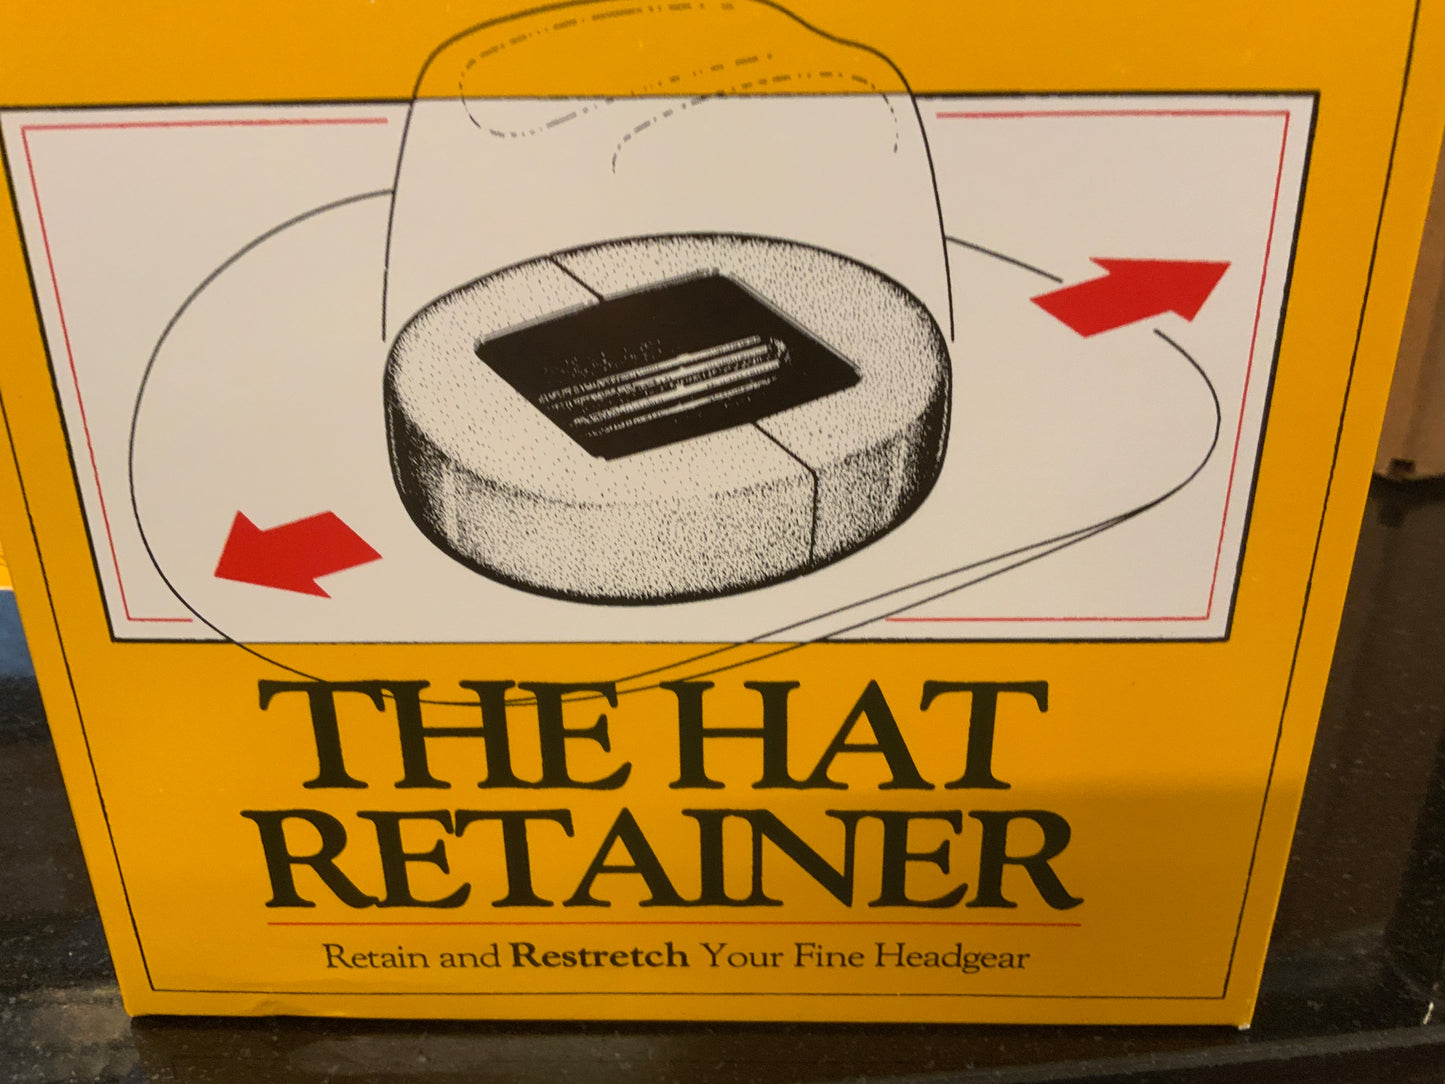 The Hat Retainer